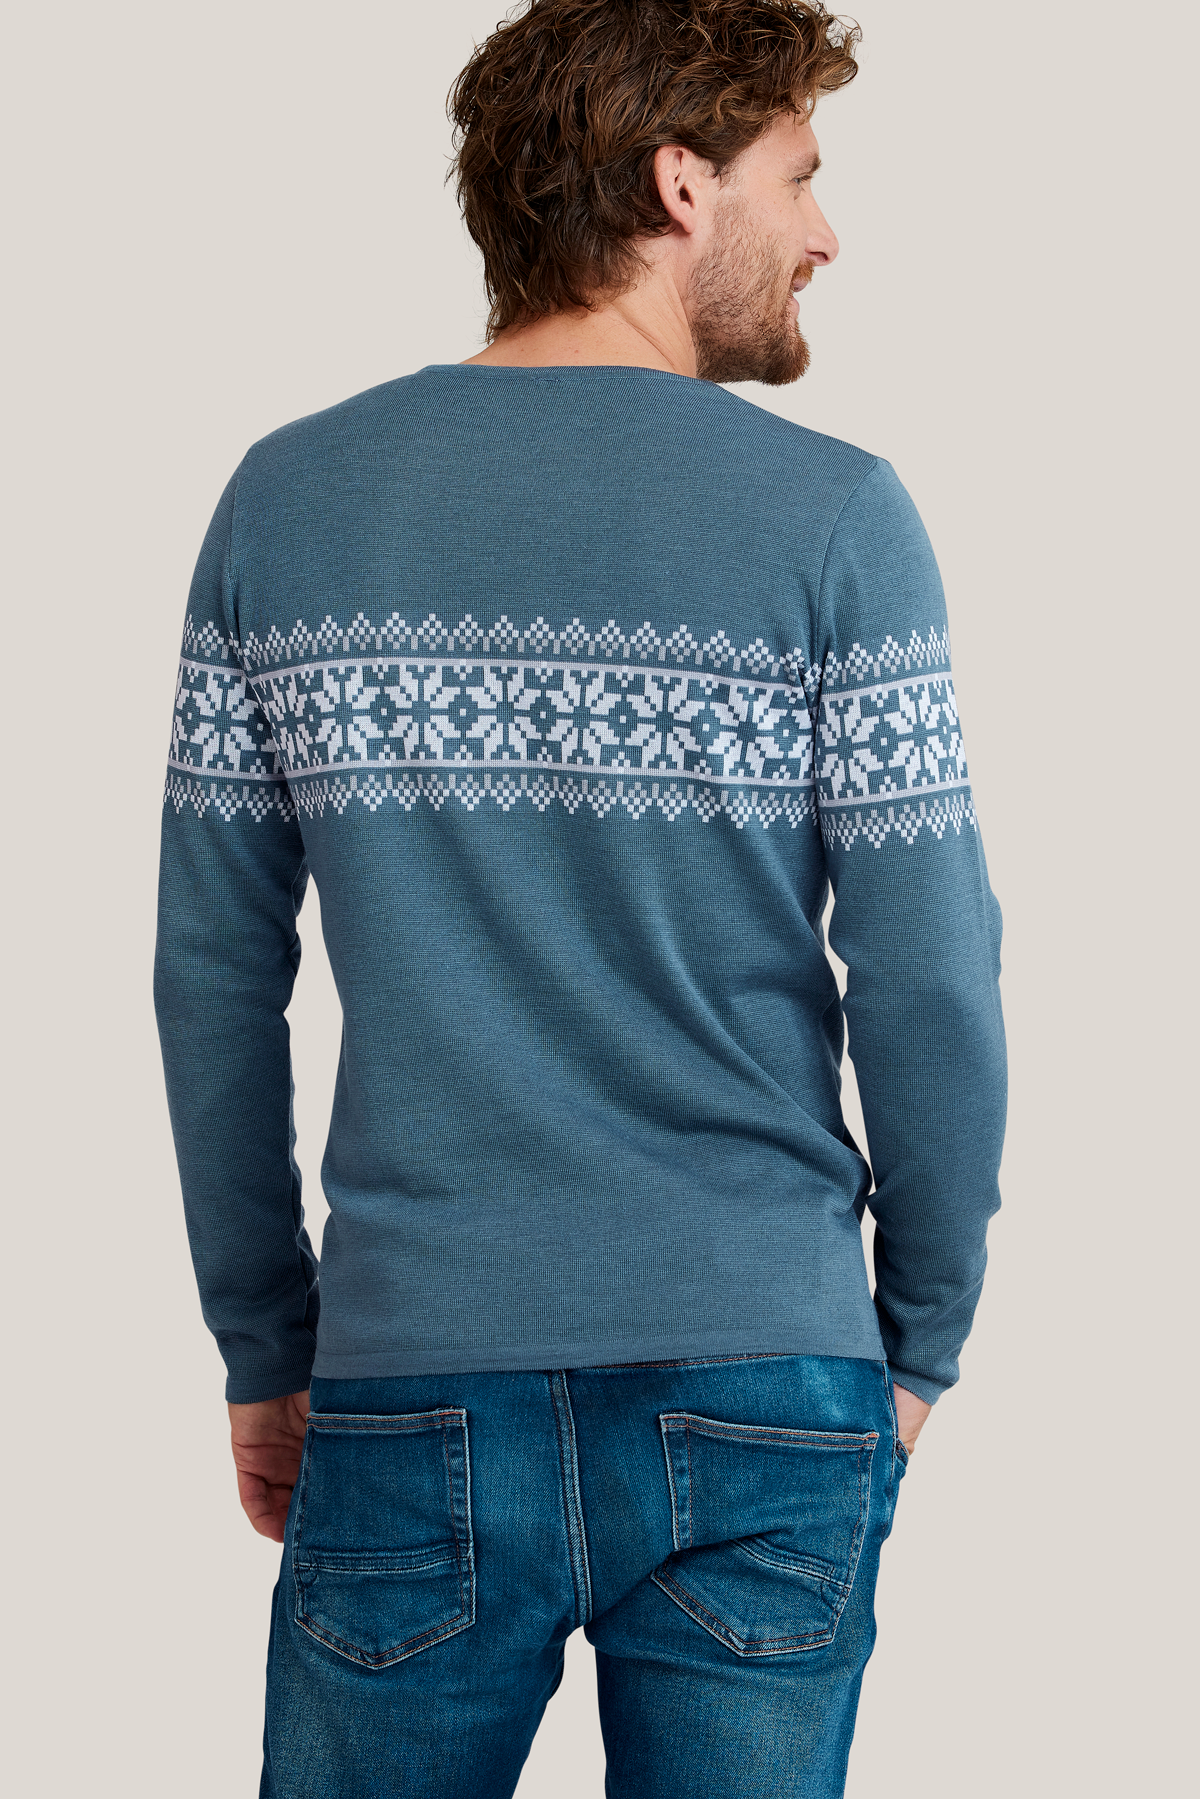 Gray-blue sweater Axel made of Merino &amp; Tencel from Tidløs